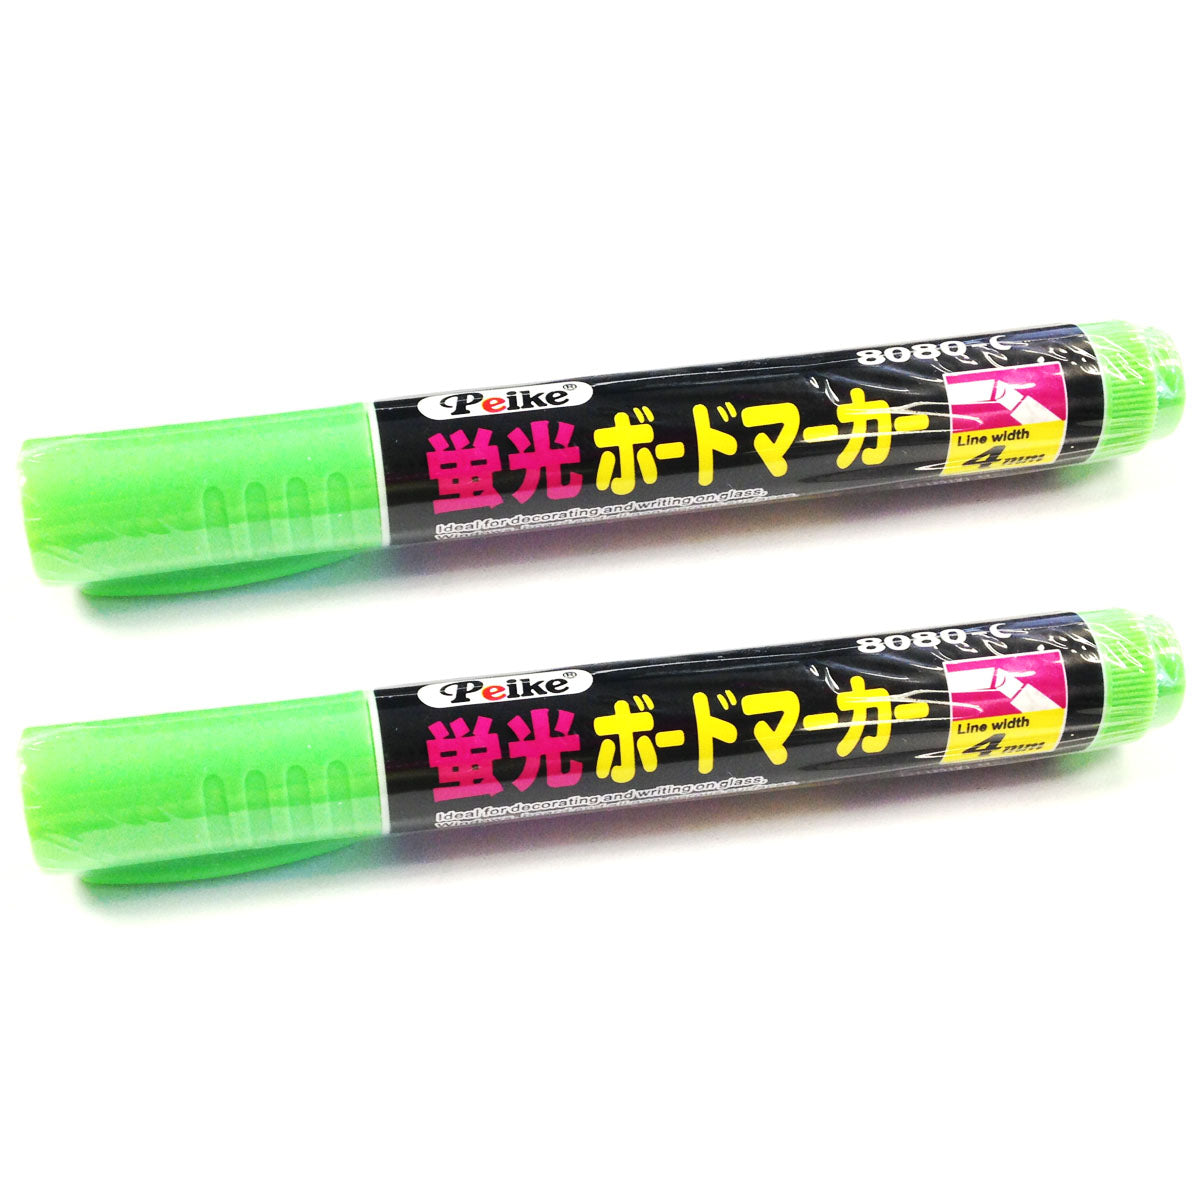 Wrapables Liquid Chalk Pen, White